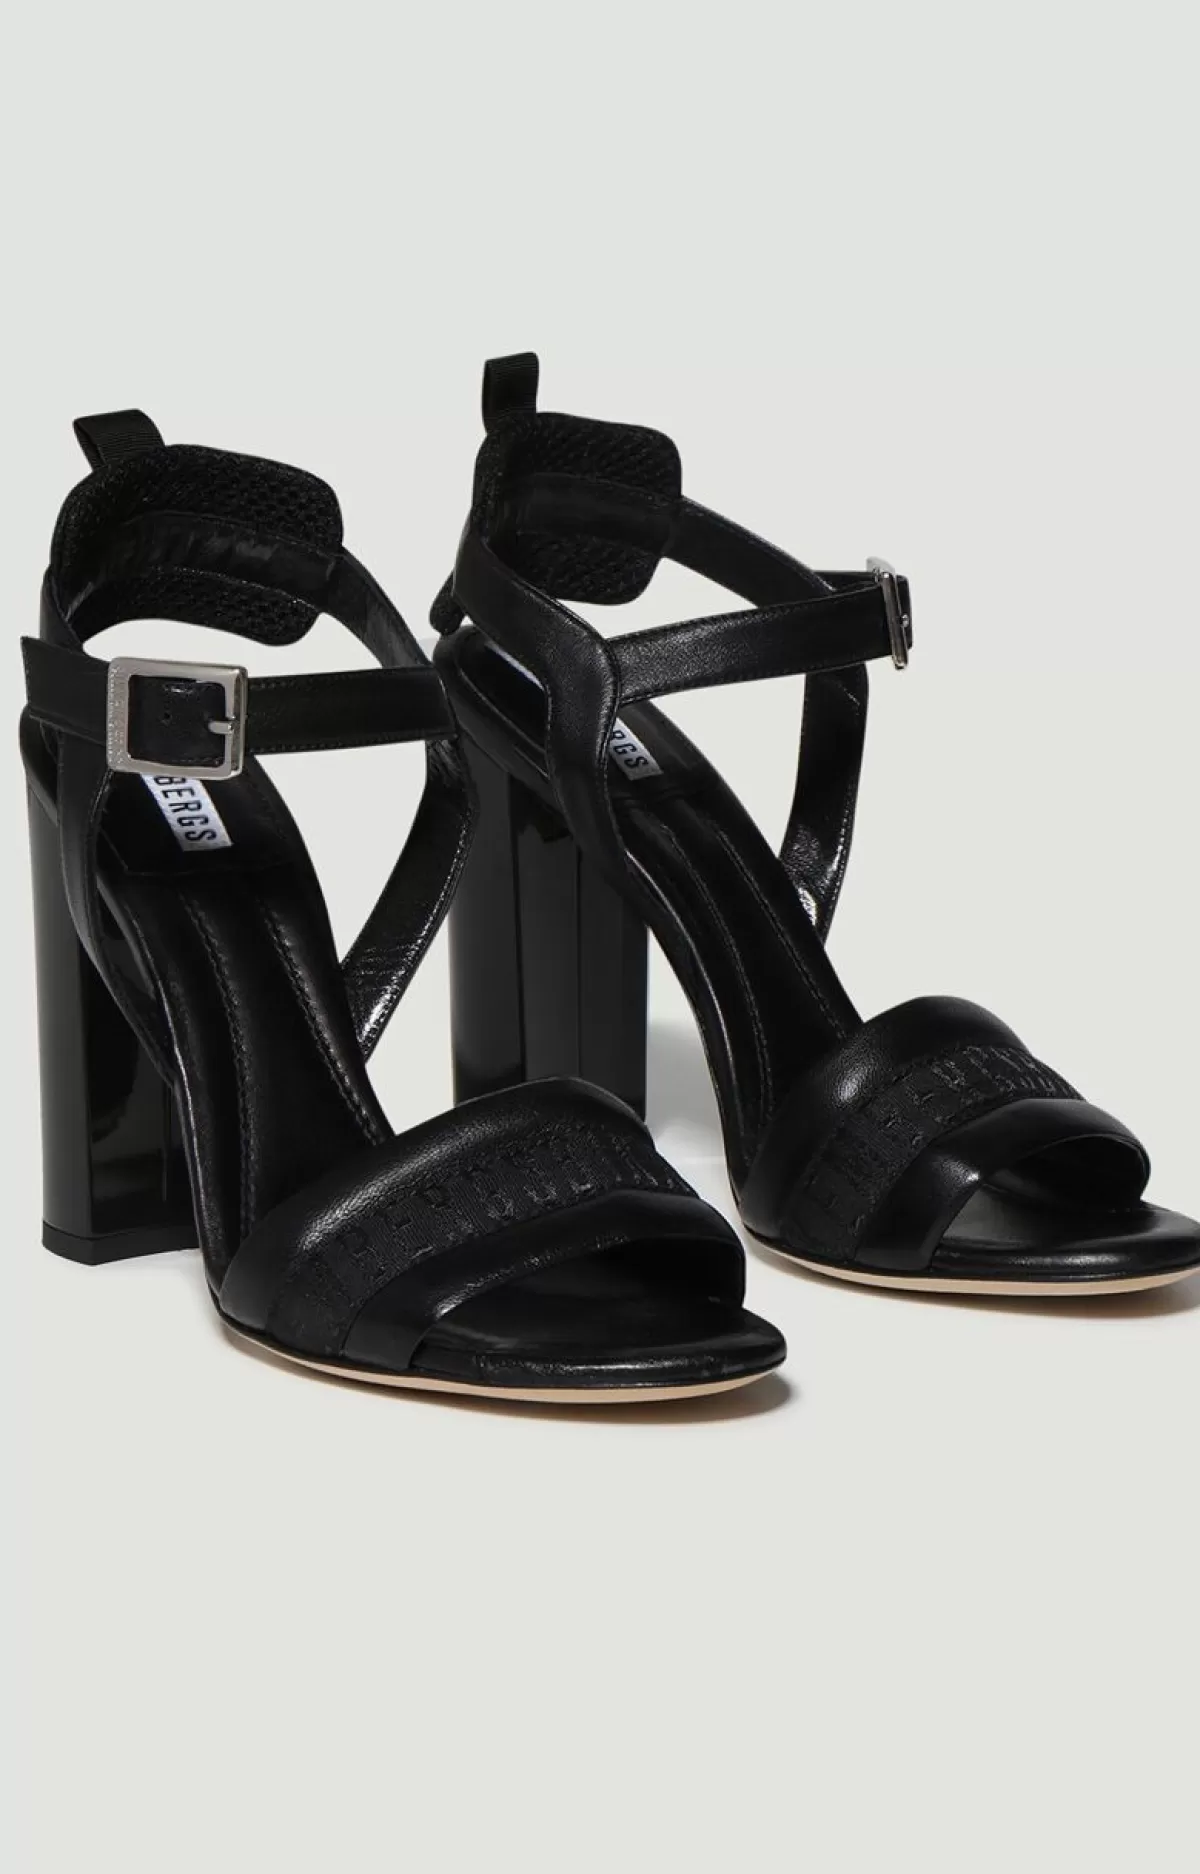 Bikkembergs Women'S High Heel Sandals - Vichia Black Online